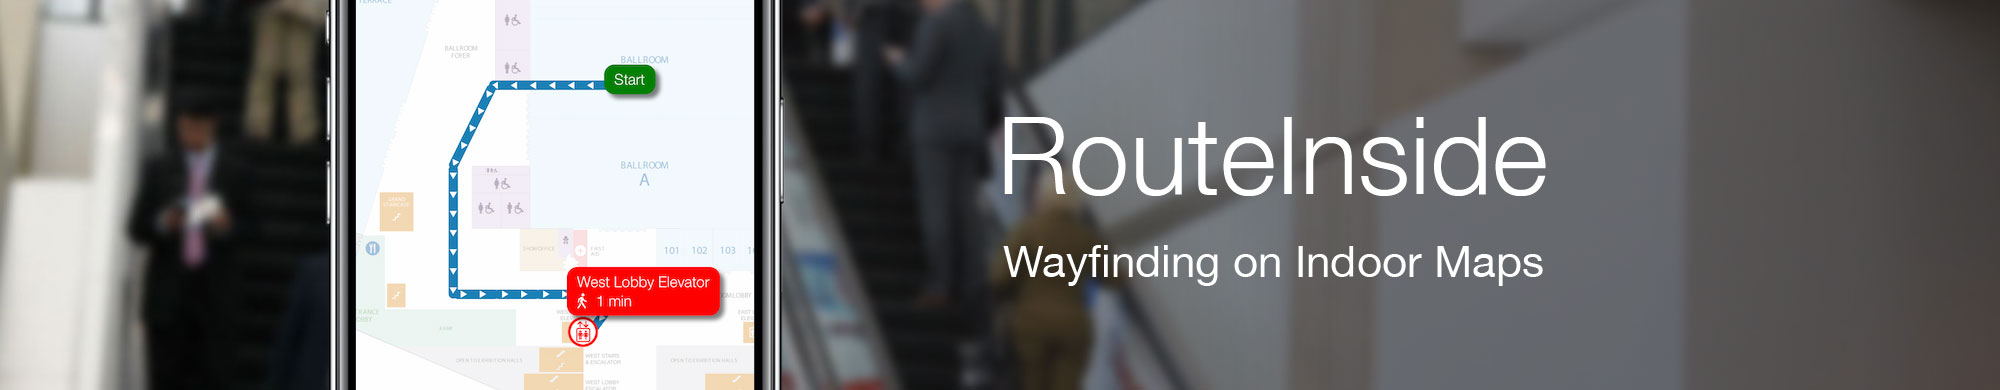 RouteInside Wayfinder indoor navigation